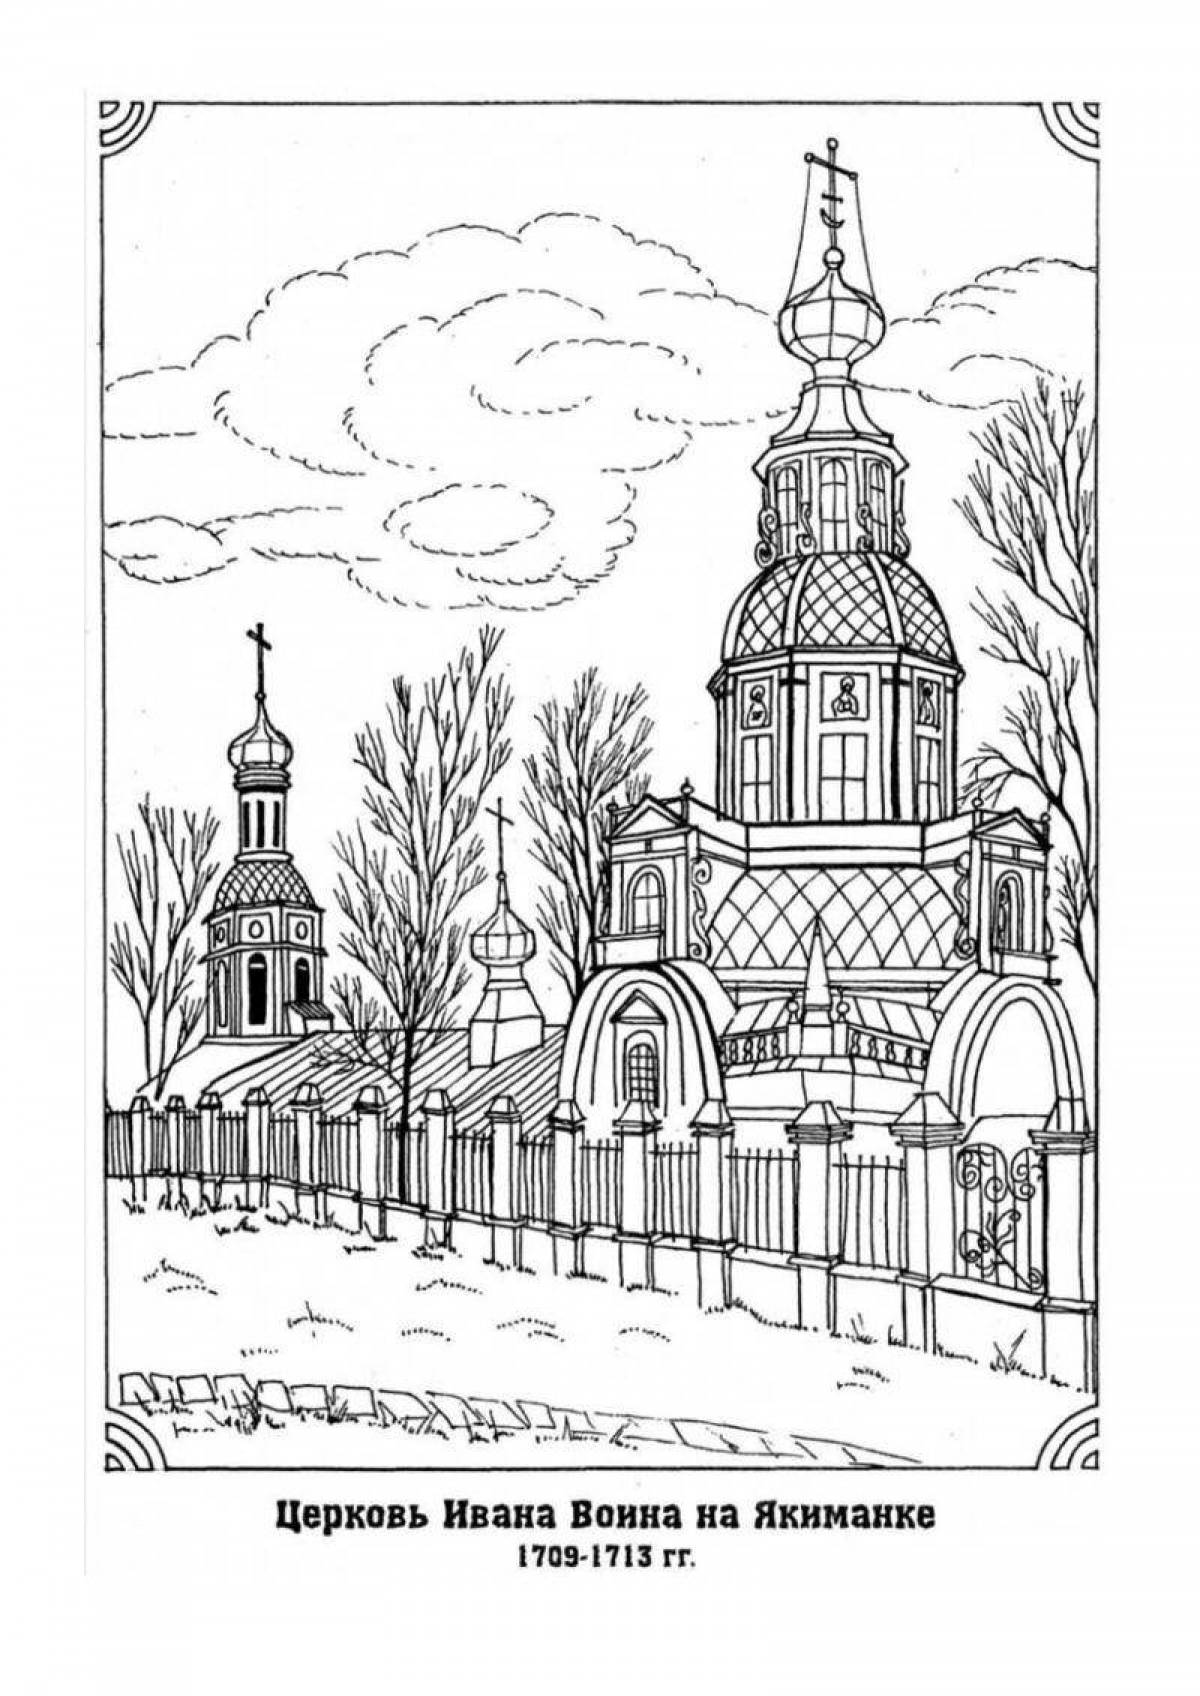 Charming Lipetsk coloring book